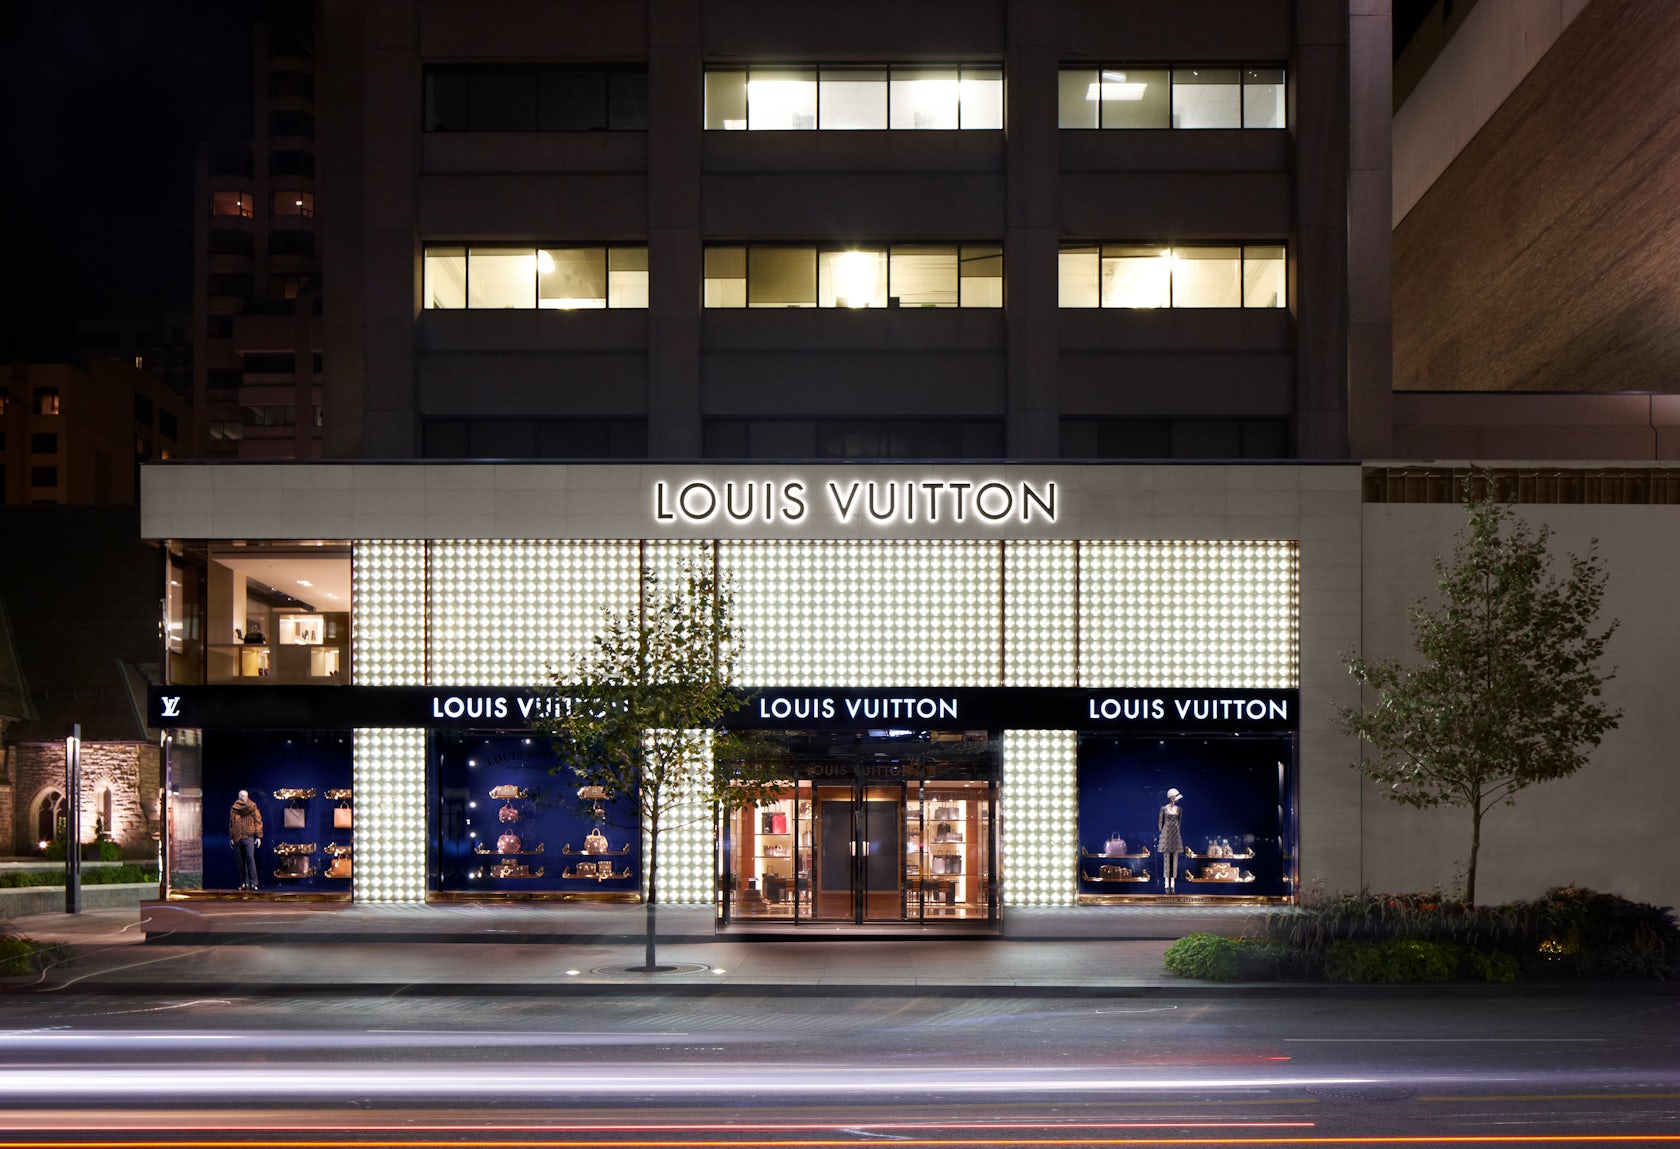 Louis Vuitton Flagship Toronto by dkstudio architects inc